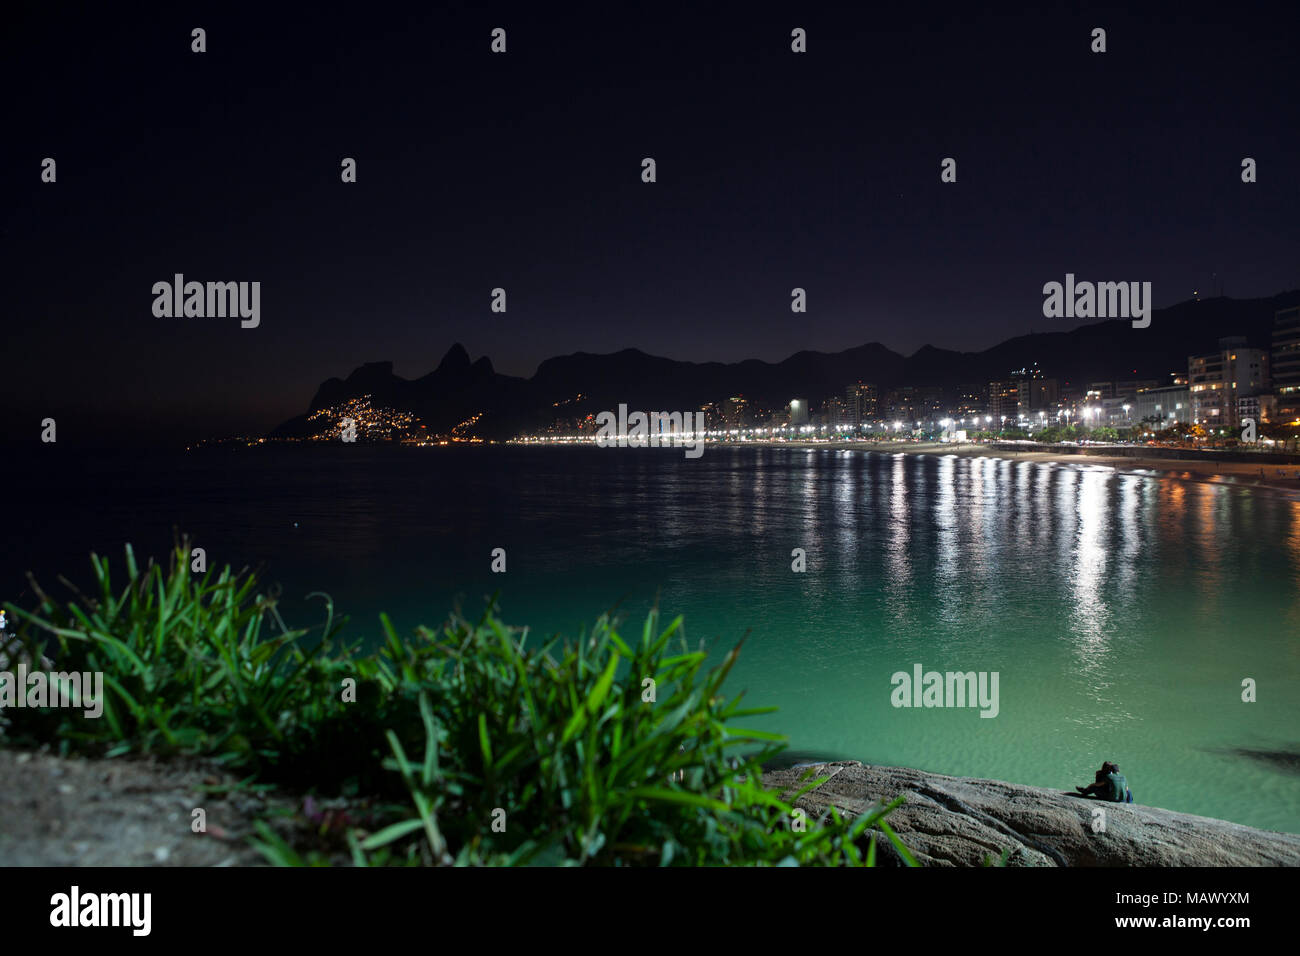 Assunto: Praia de Ipanema vista da Pedra do Arpoador a noite Lokale: Rio de Janeiro Daten: 07/2012 Autor: Eduardo Zappia Stockfoto